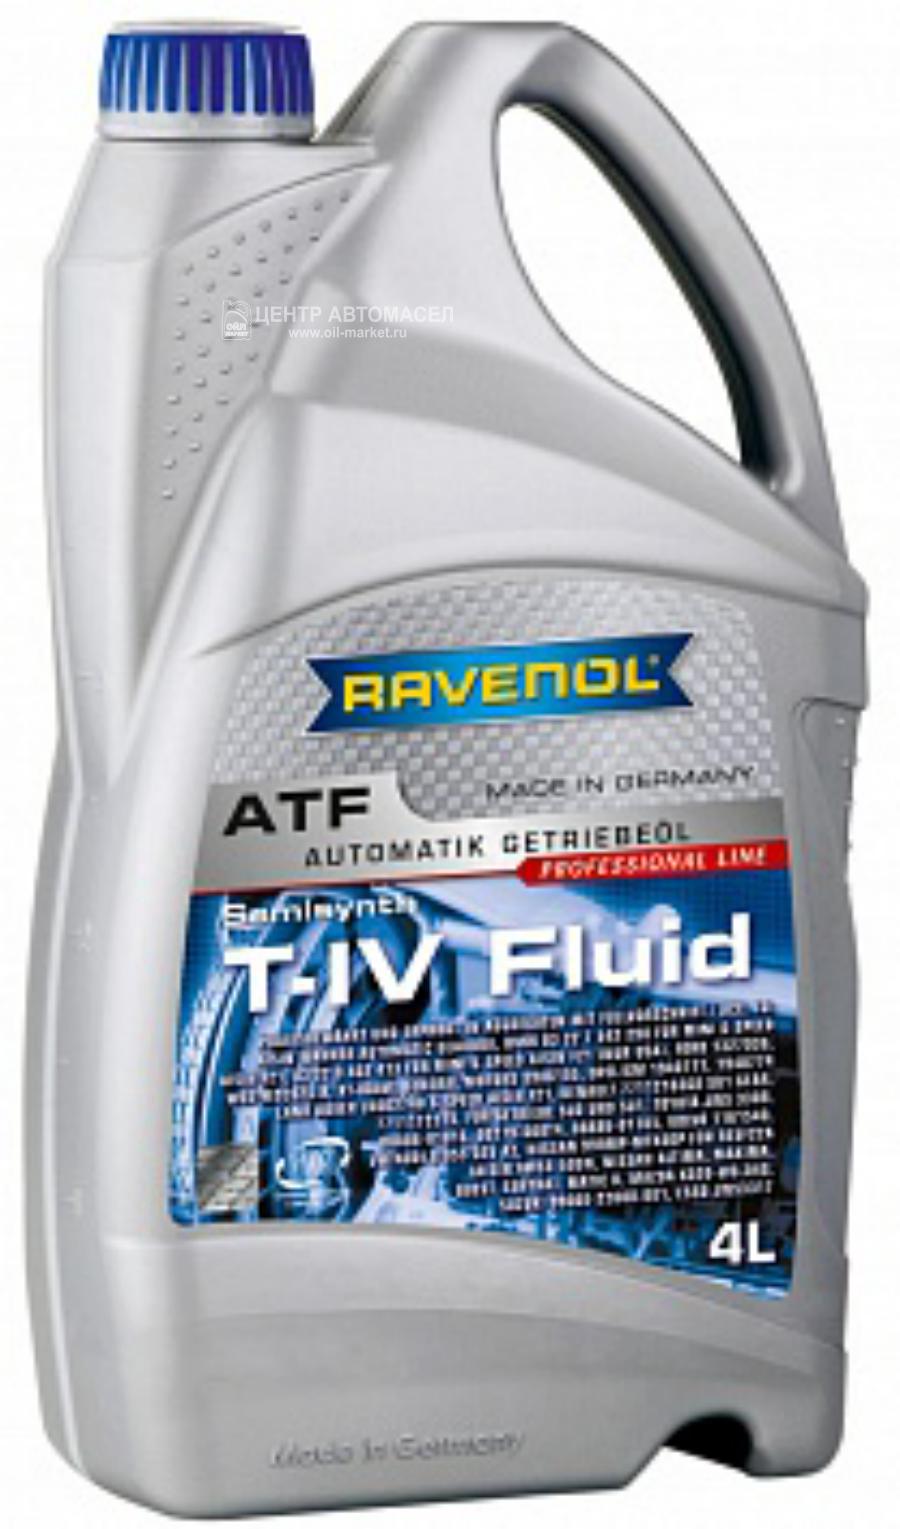 121210200401999 RAVENOL Трансмиссионное масло ravenol atf t-iv fluid ( 4л) new